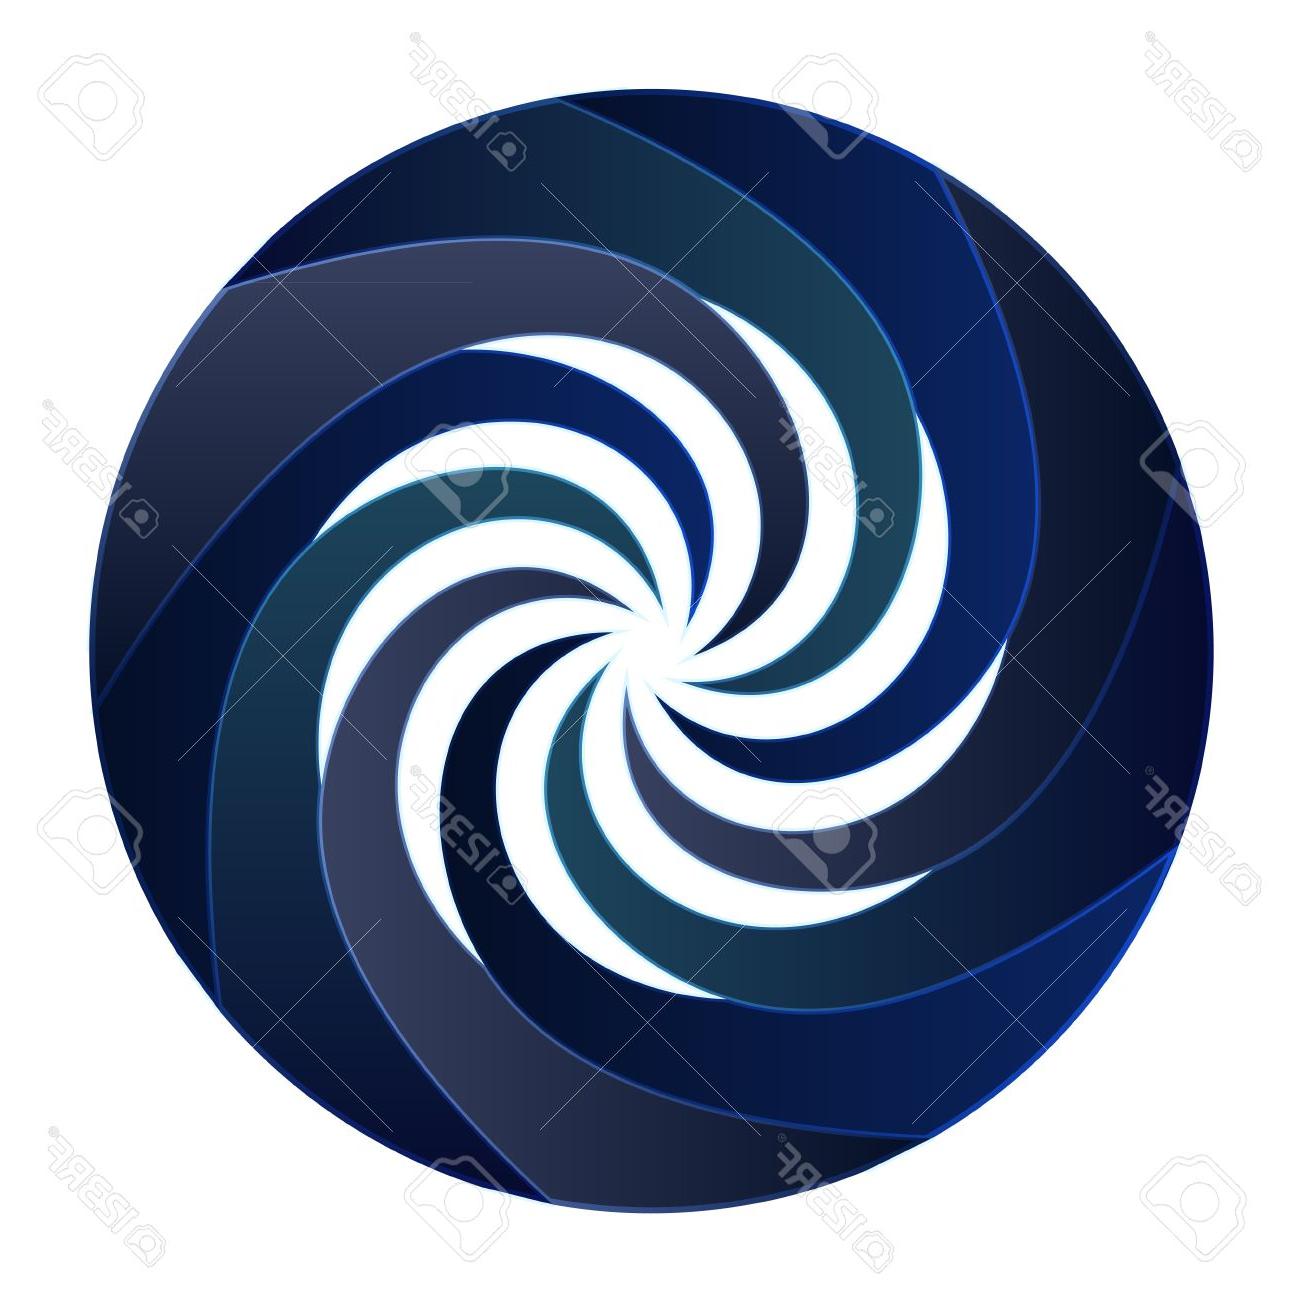 Circle Swirl Vector at GetDrawings | Free download